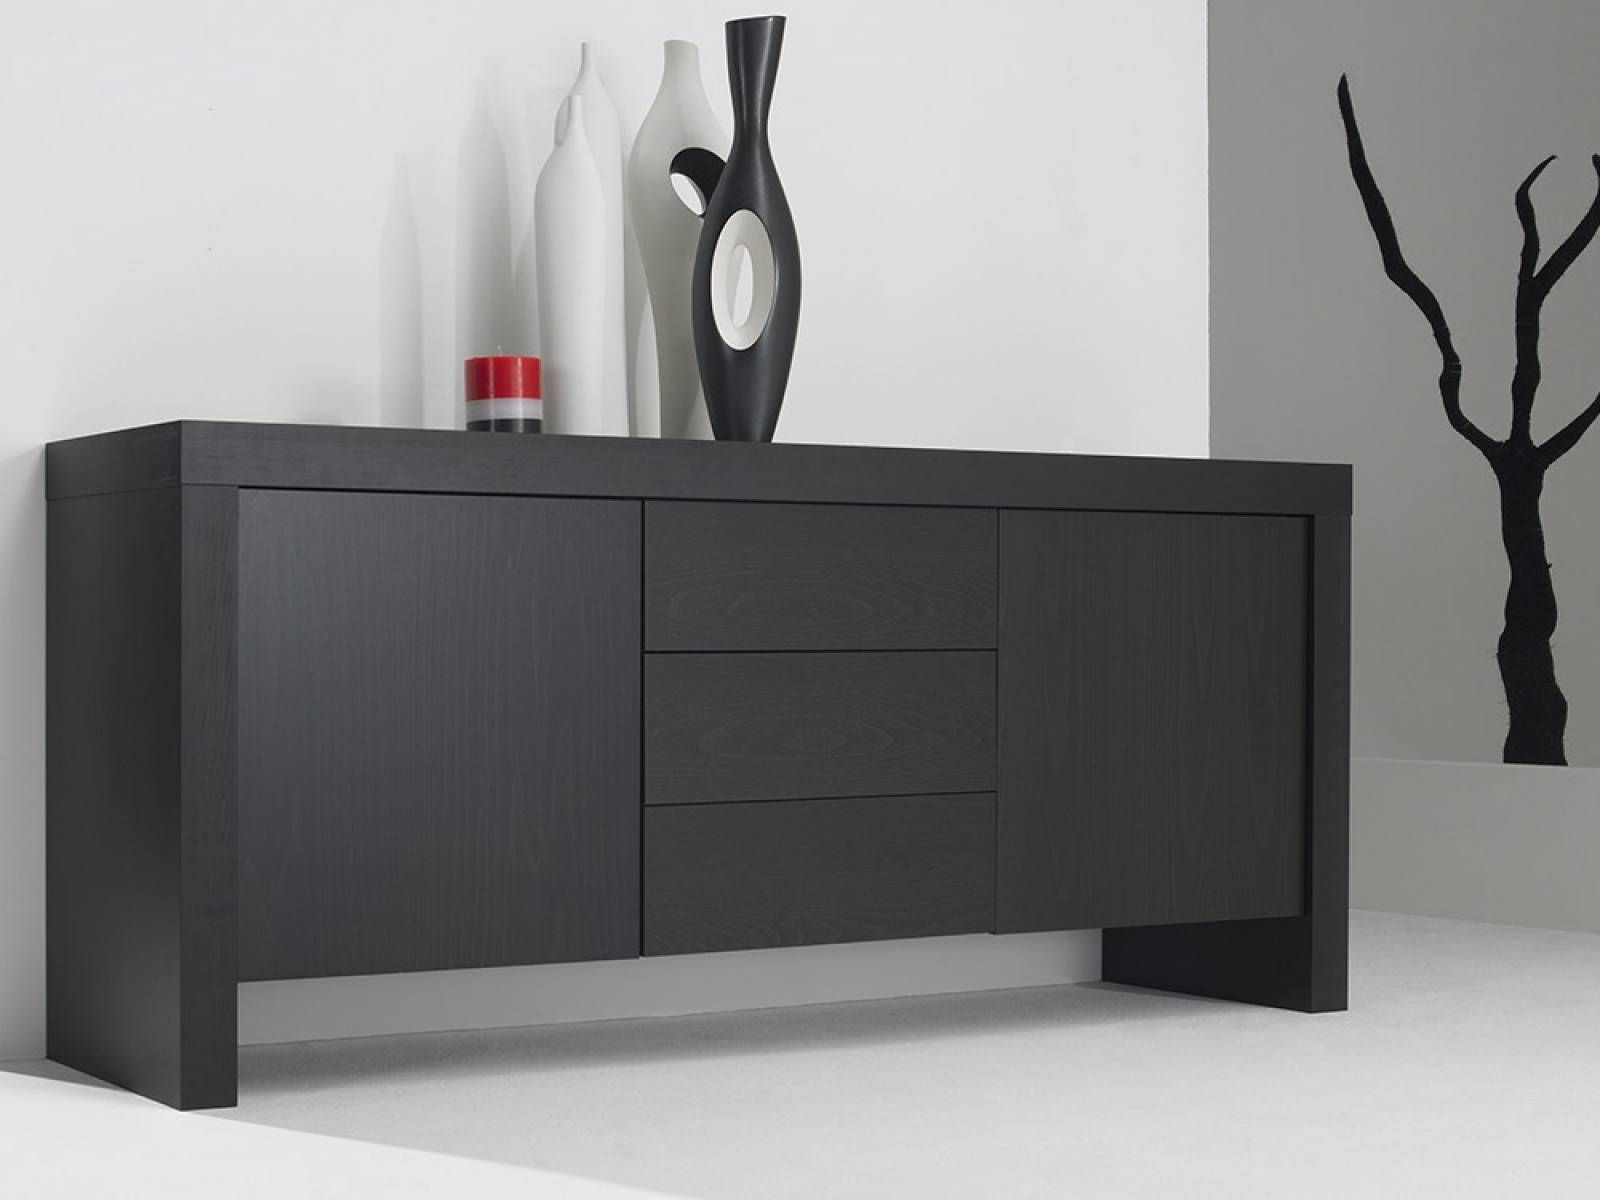 Splendid Dark Grey Oak Sideboard With Modern Style Using Cabinet Within Dark Sideboard Furniture (View 13 of 20)